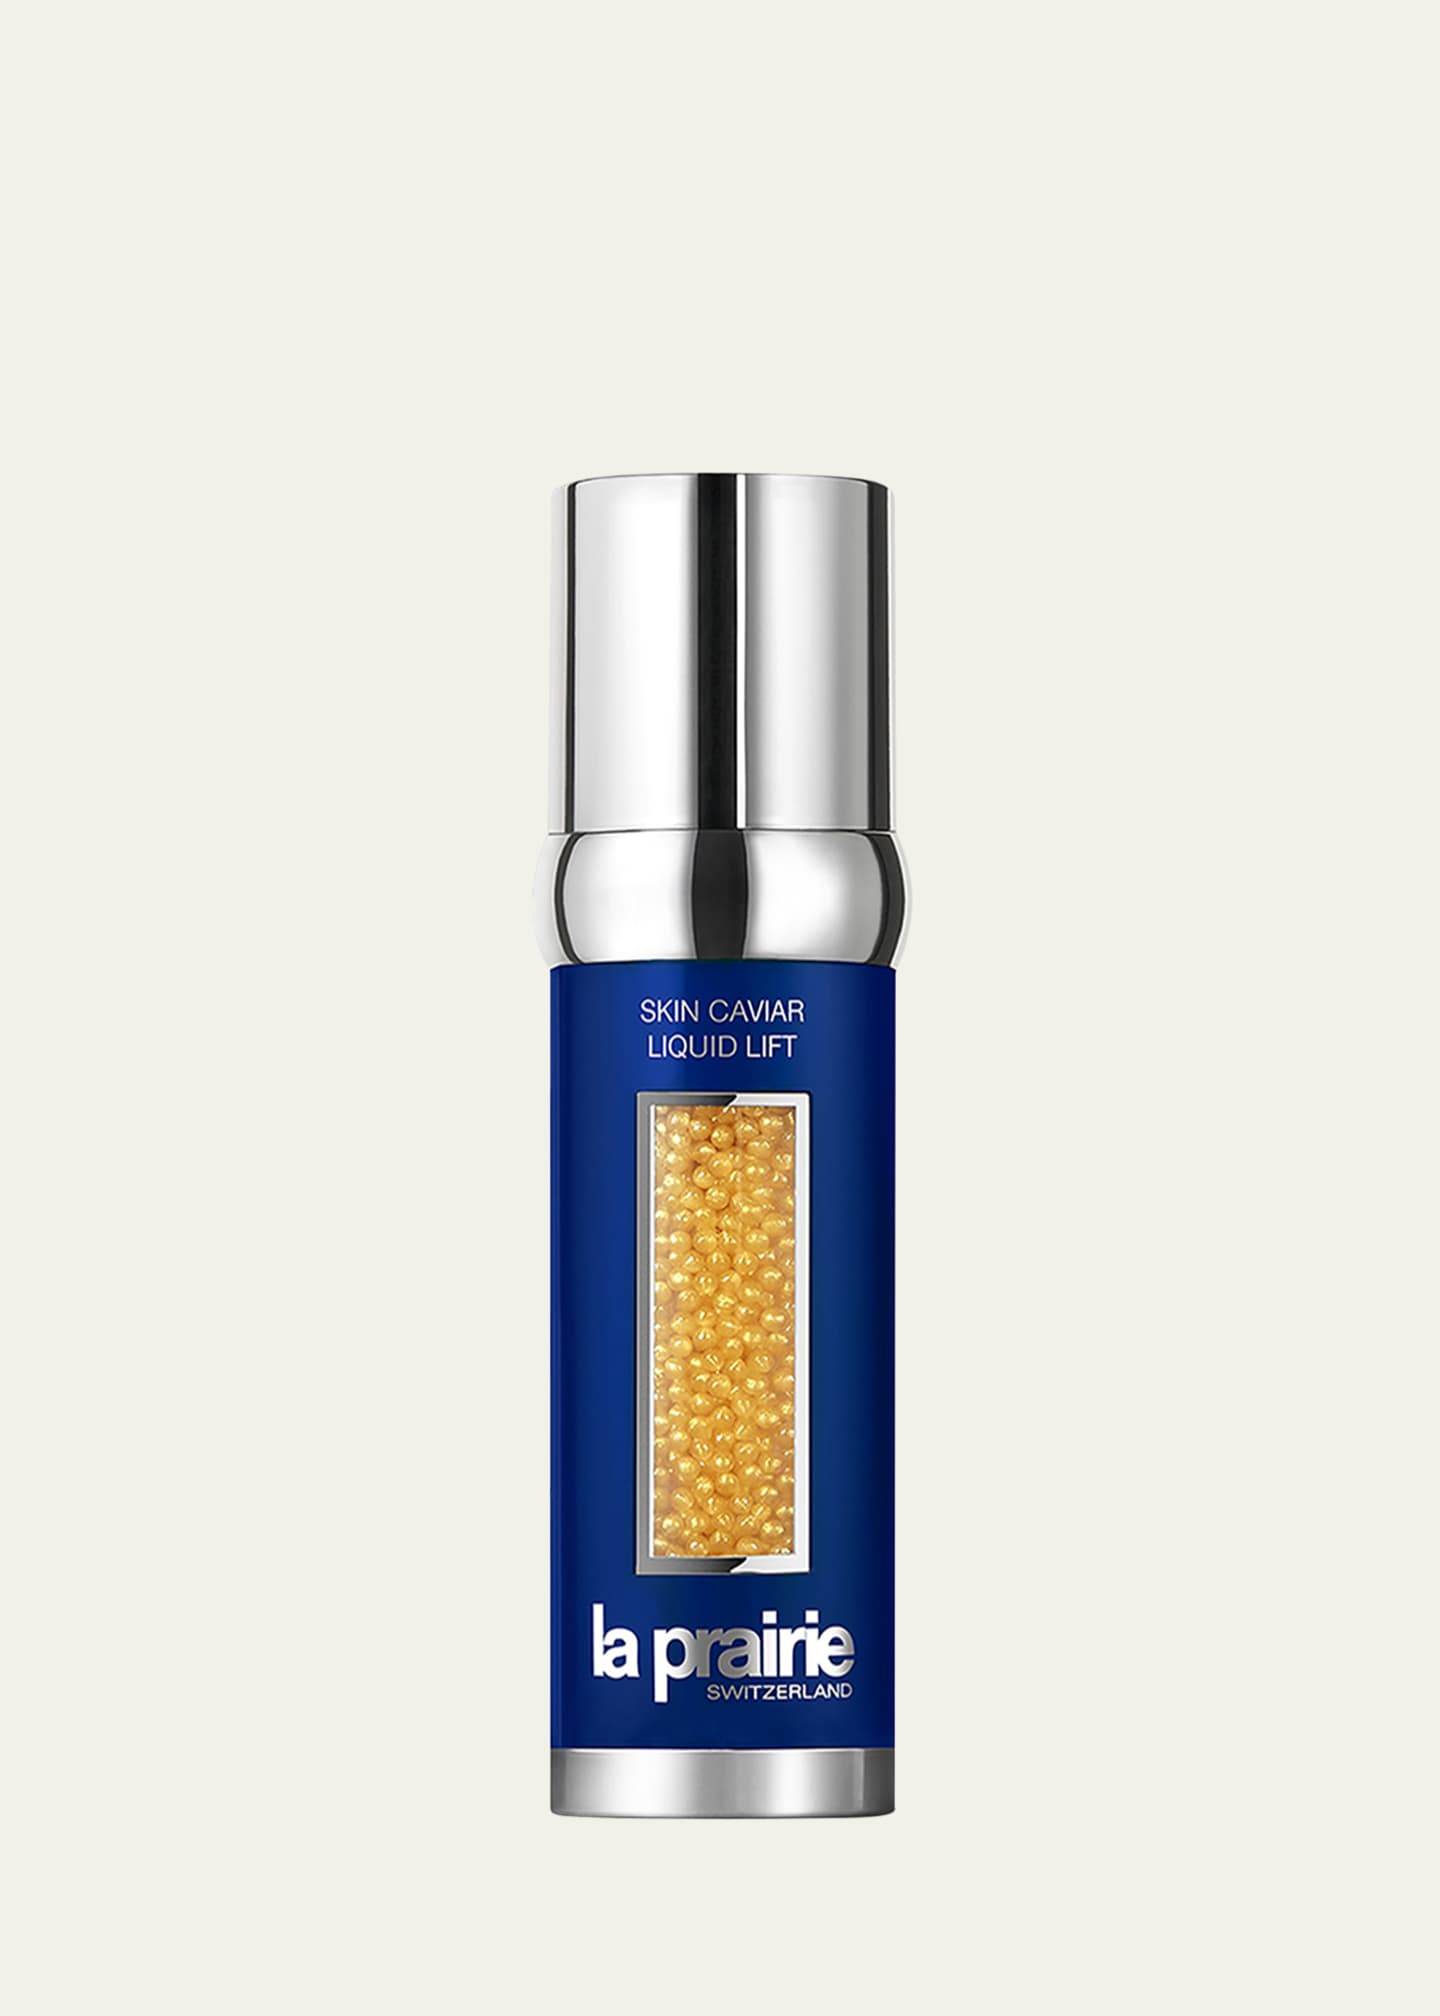 La Prairie 1.7 oz. Skin Caviar Liquid Lift Face Serum Image 1 of 5